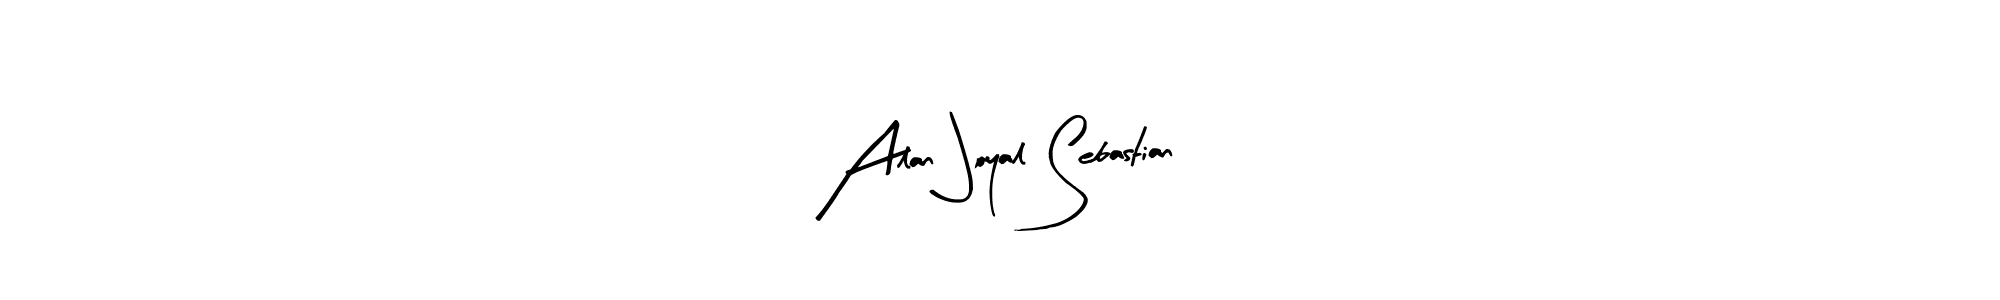 How to Draw Alan Joyal Sebastian signature style? Arty Signature is a latest design signature styles for name Alan Joyal Sebastian. Alan Joyal Sebastian signature style 8 images and pictures png